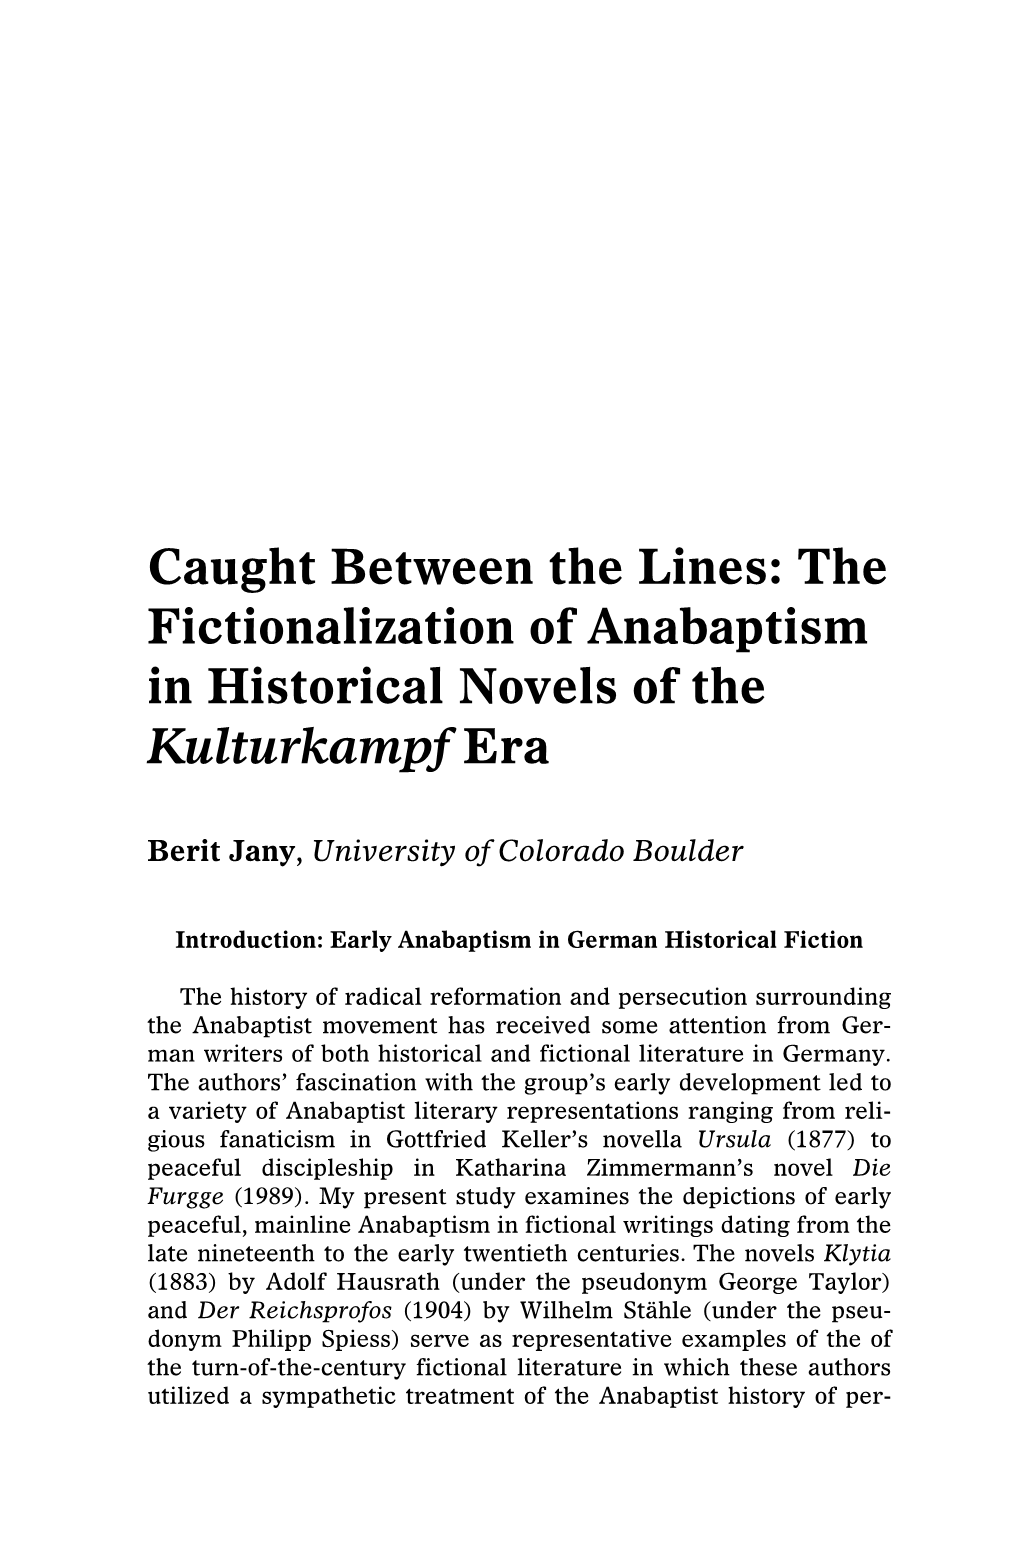 The Fictionalization of Anabaptism in Historical Novels of the Kulturkampf Era